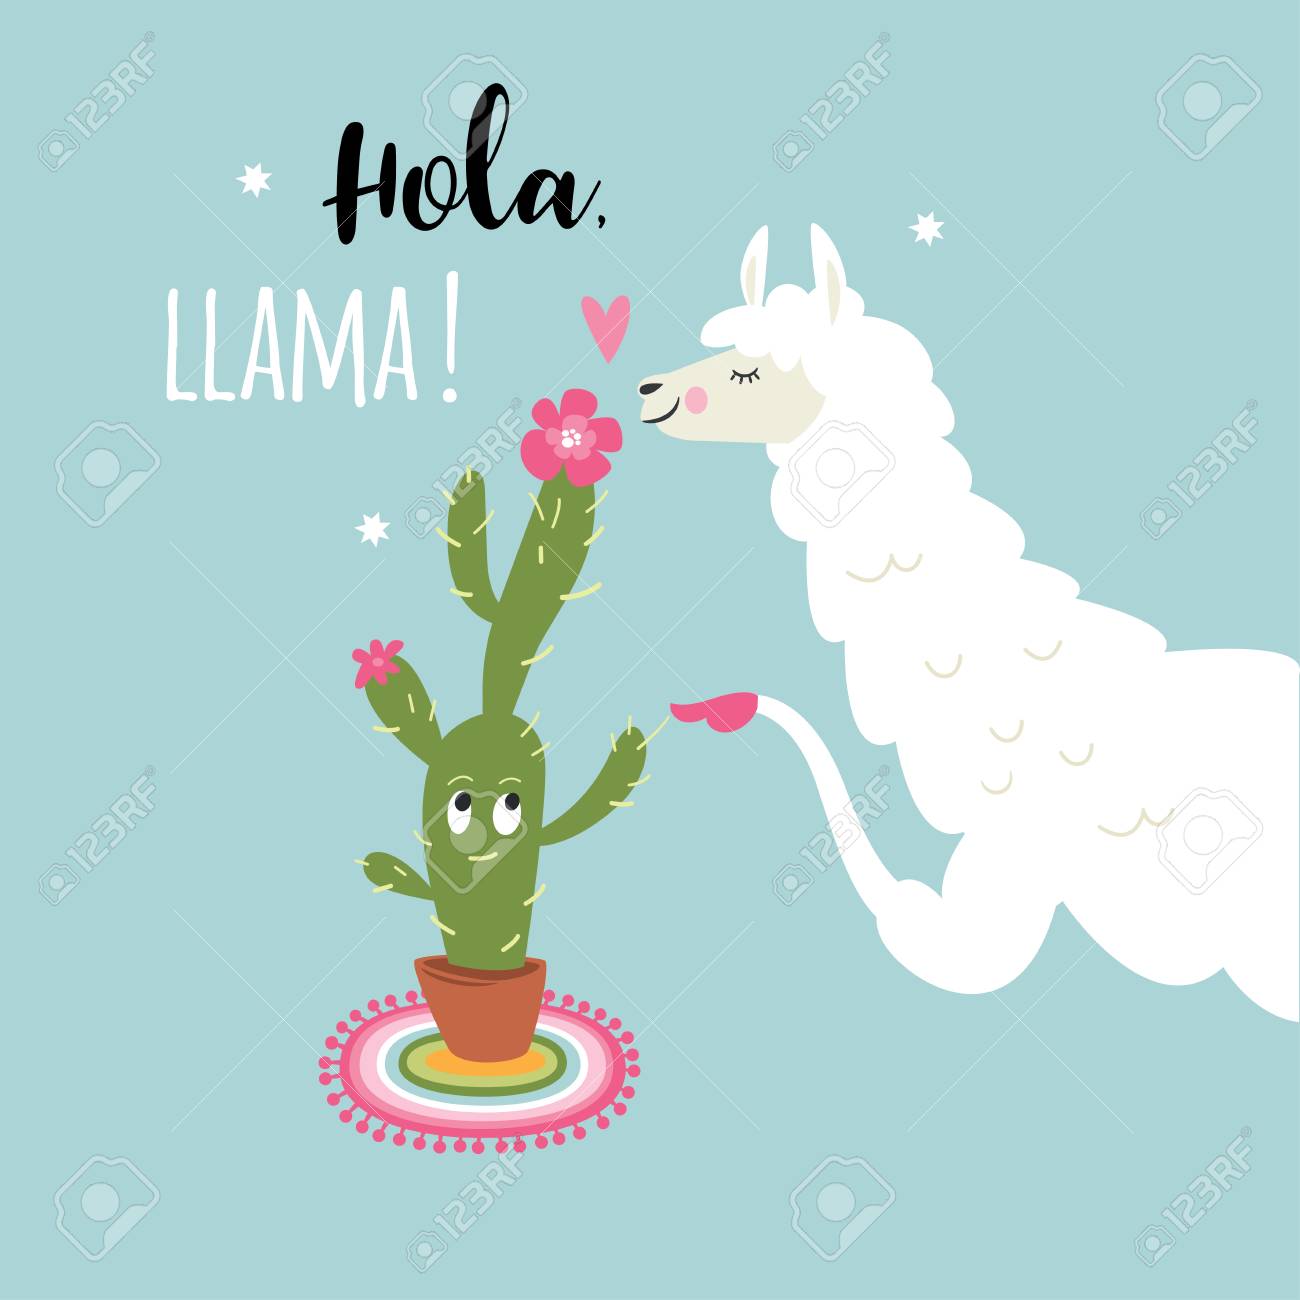 Free download Cute Llama Illustration On Blue Background Royalty ...